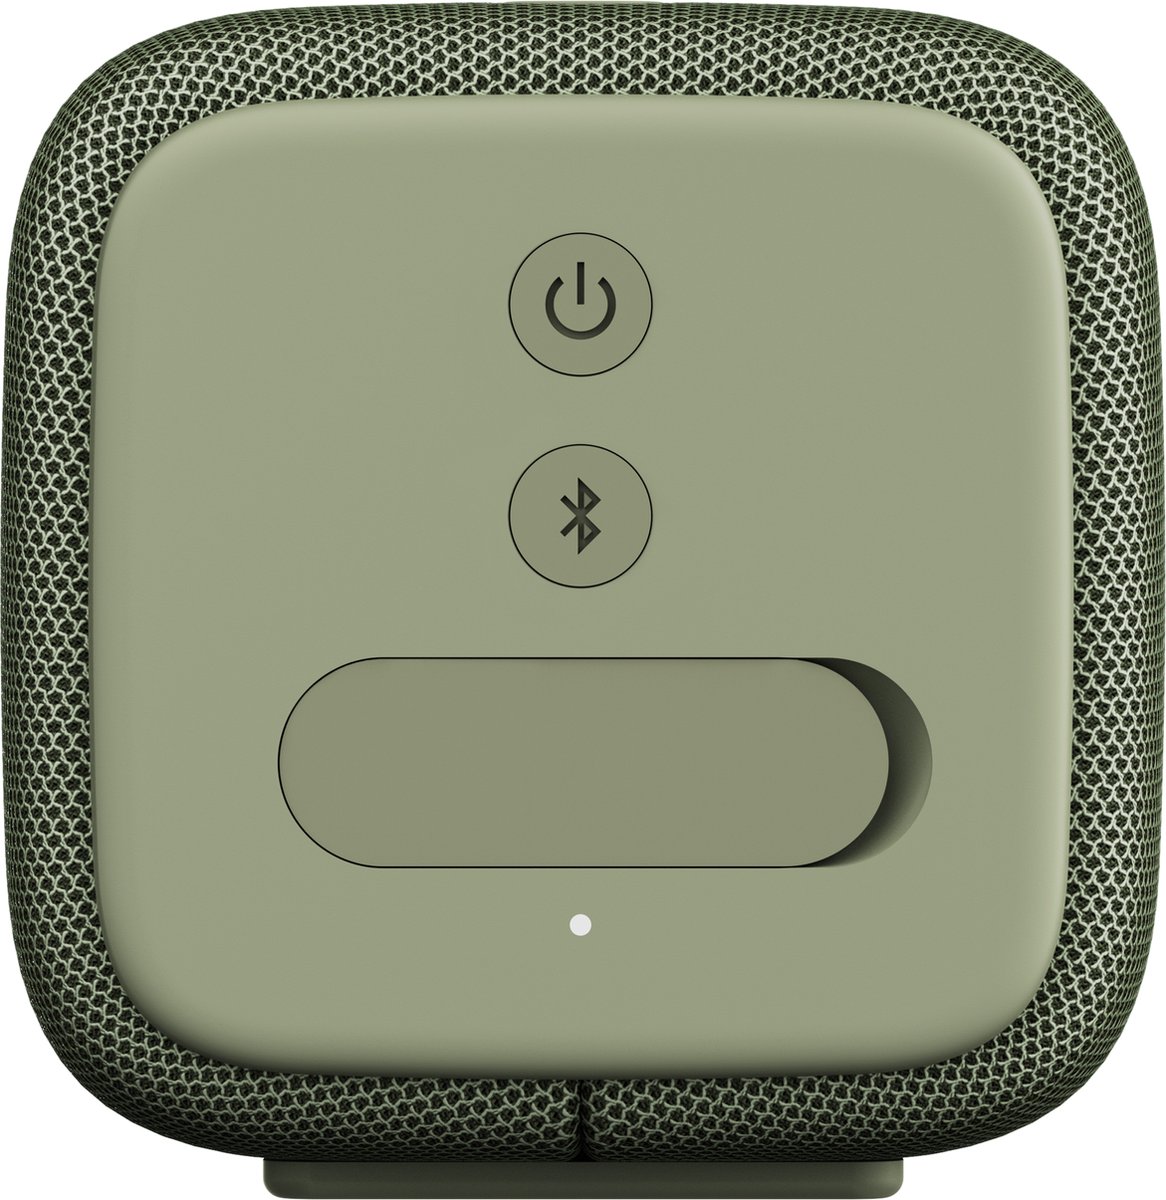 Fresh \'n Rebel - Draadloze Bluetooth speaker - Rockbox Bold S - Dried Green  | bol